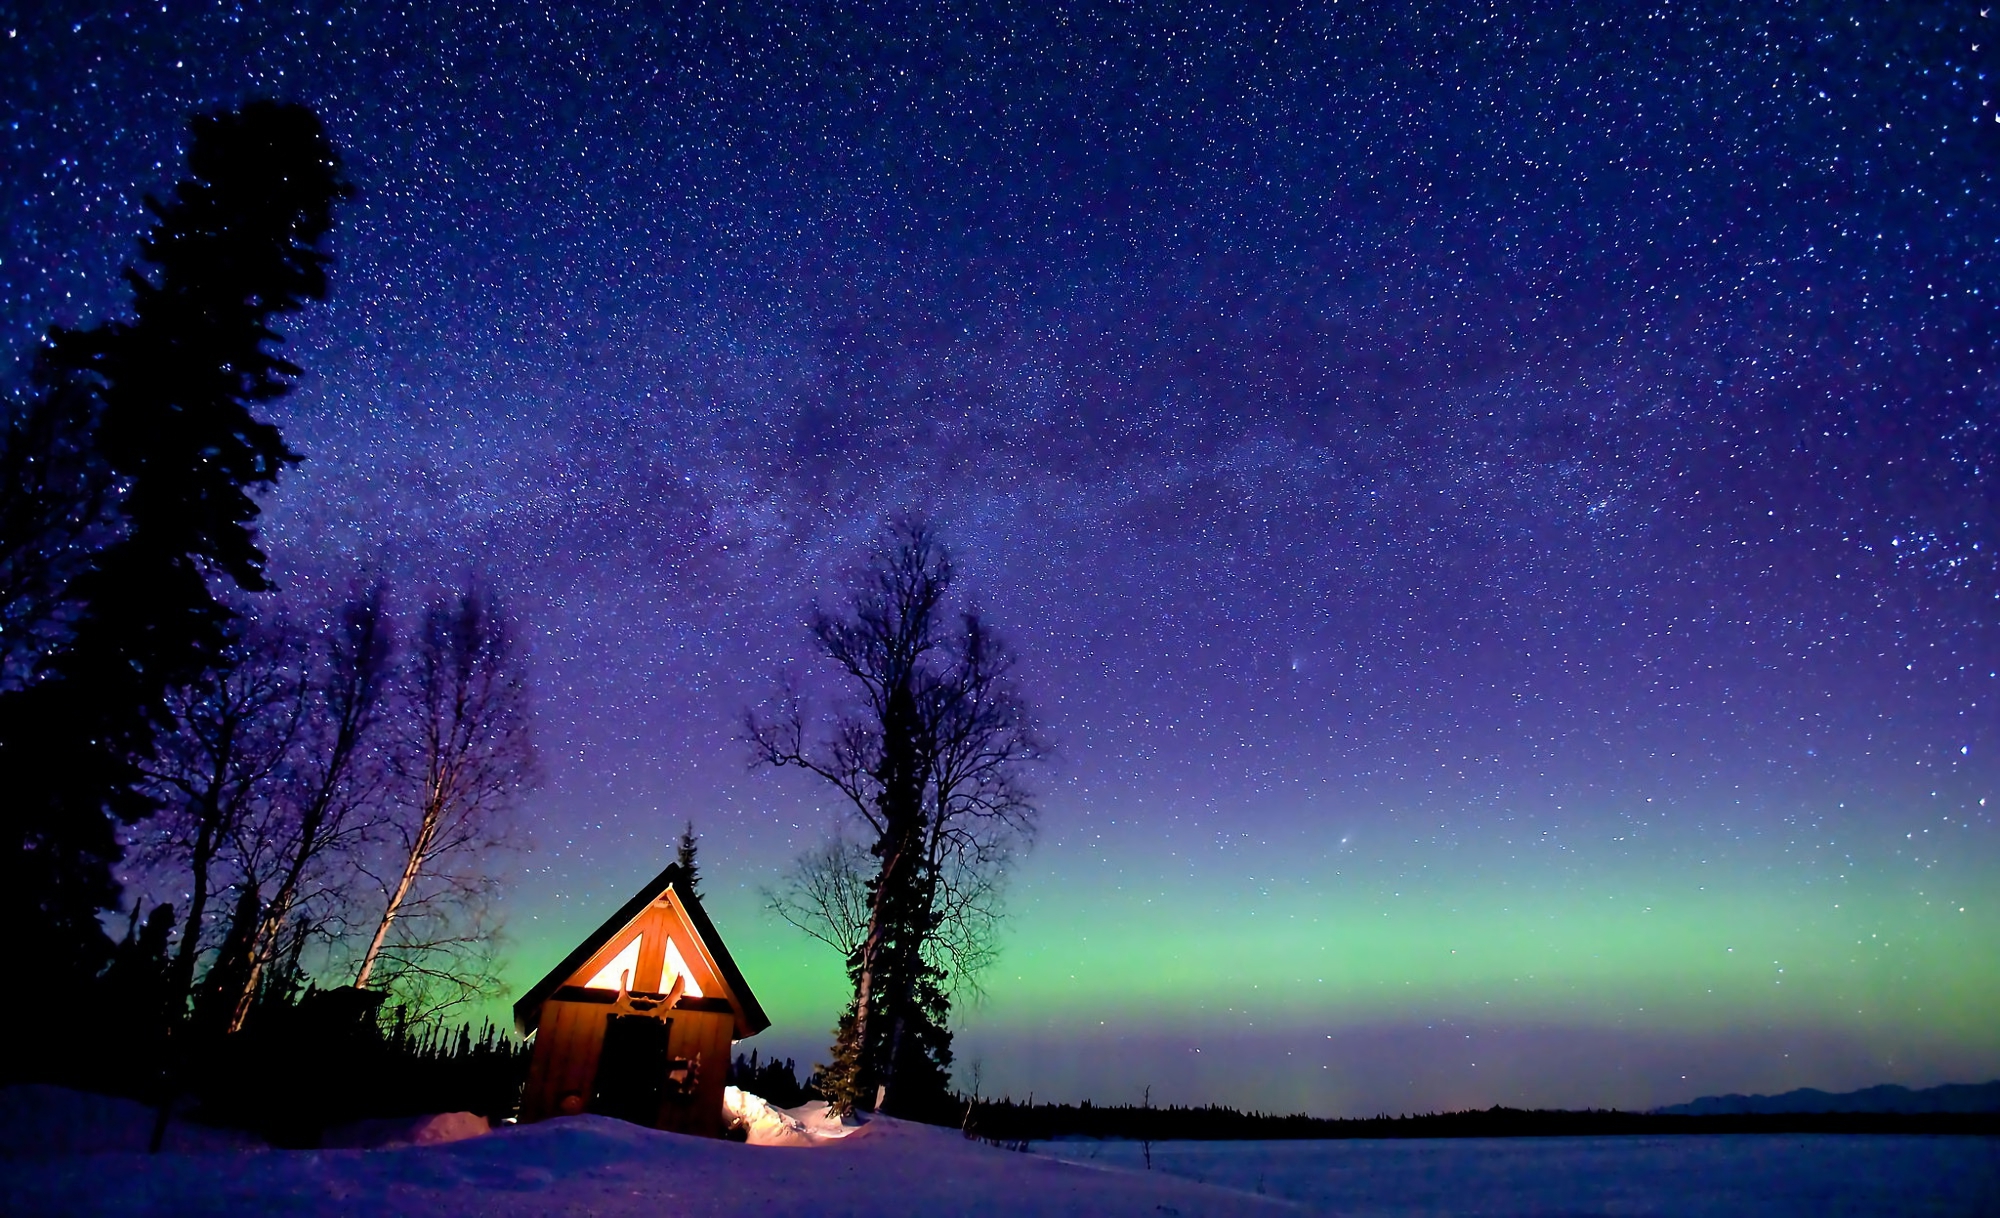 Starry Sky over Winter Cabin